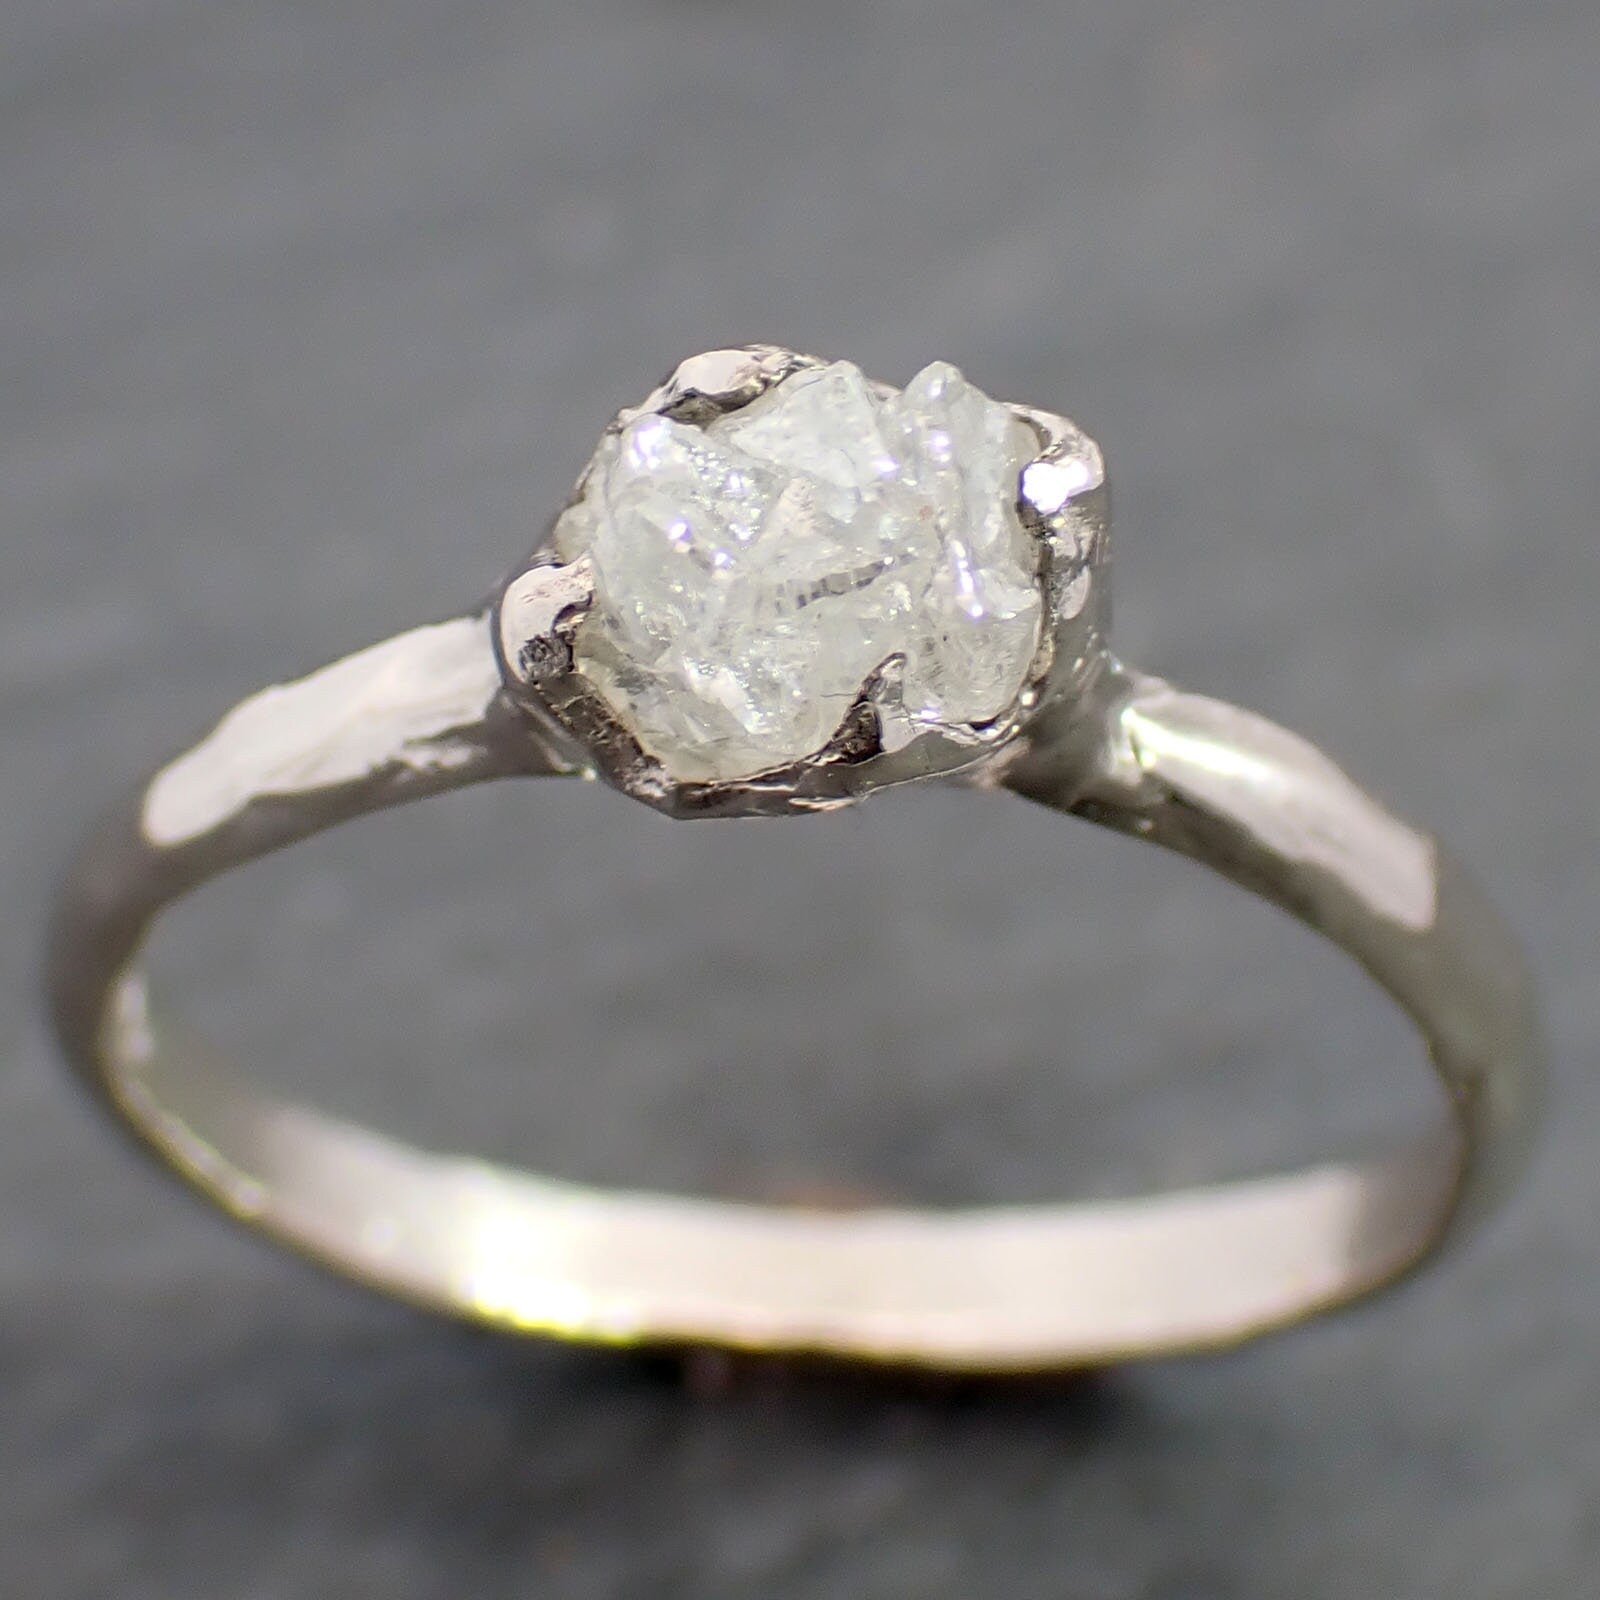 Raw White Diamond Solitaire Engagement Ring 14k White Gold Stacking Rough Diamond byAngeline 3469